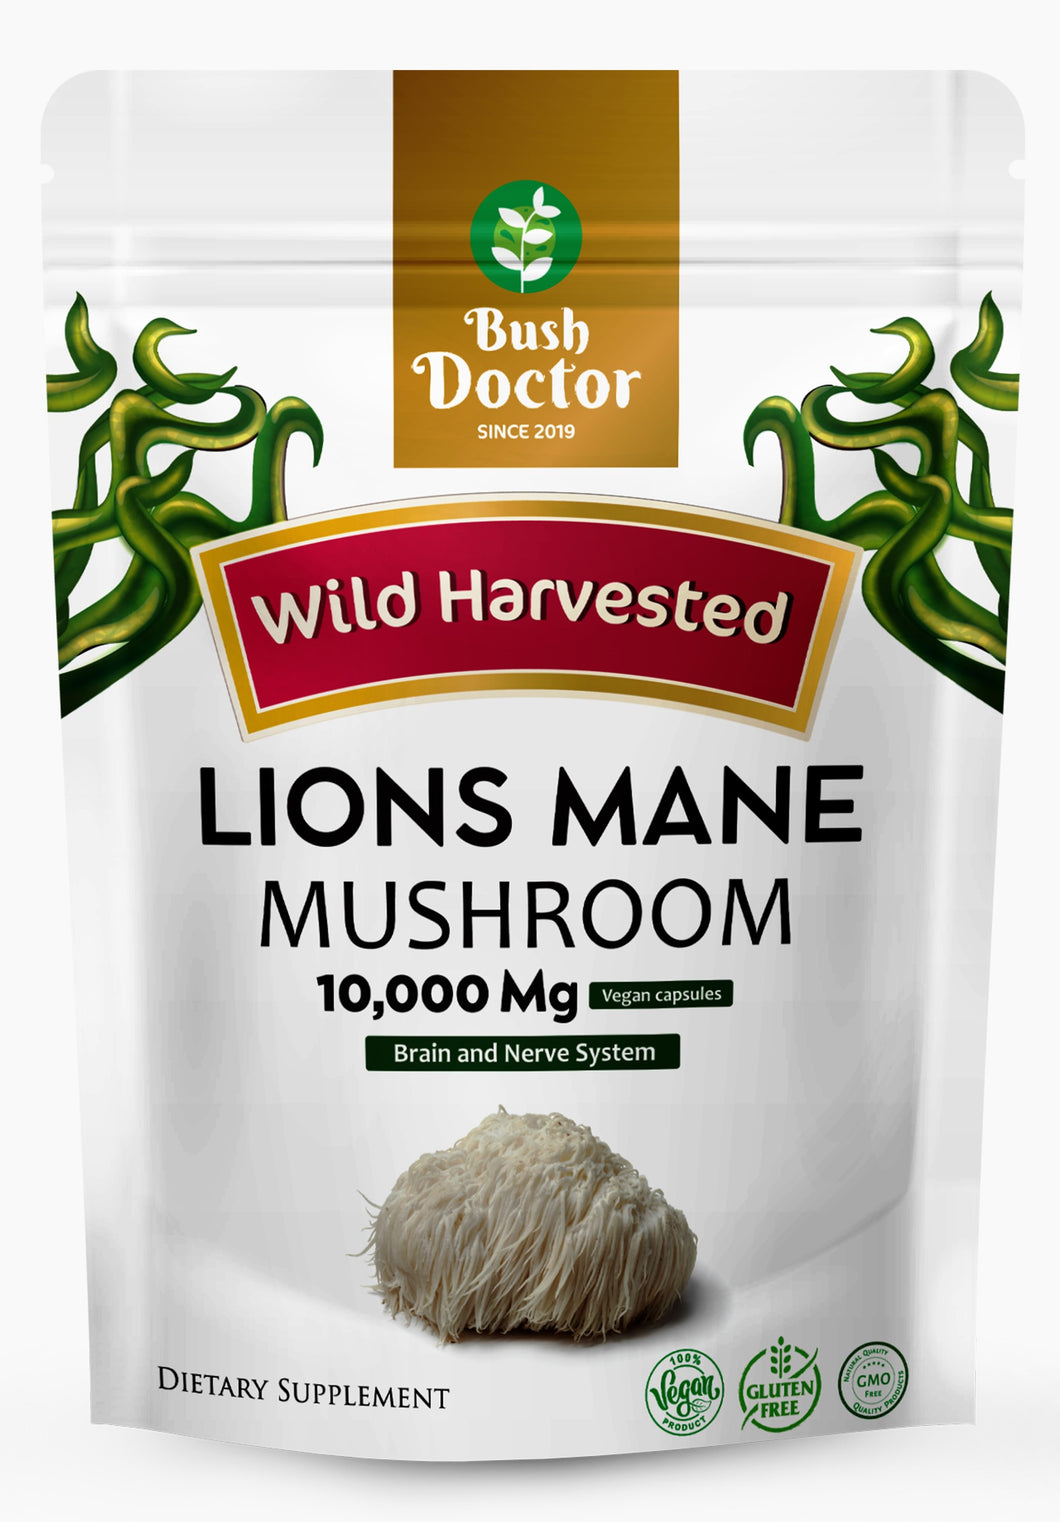 Lions Mane Mushroom Extract Capsules 10,000mg 240mg Polysaccharides Strong